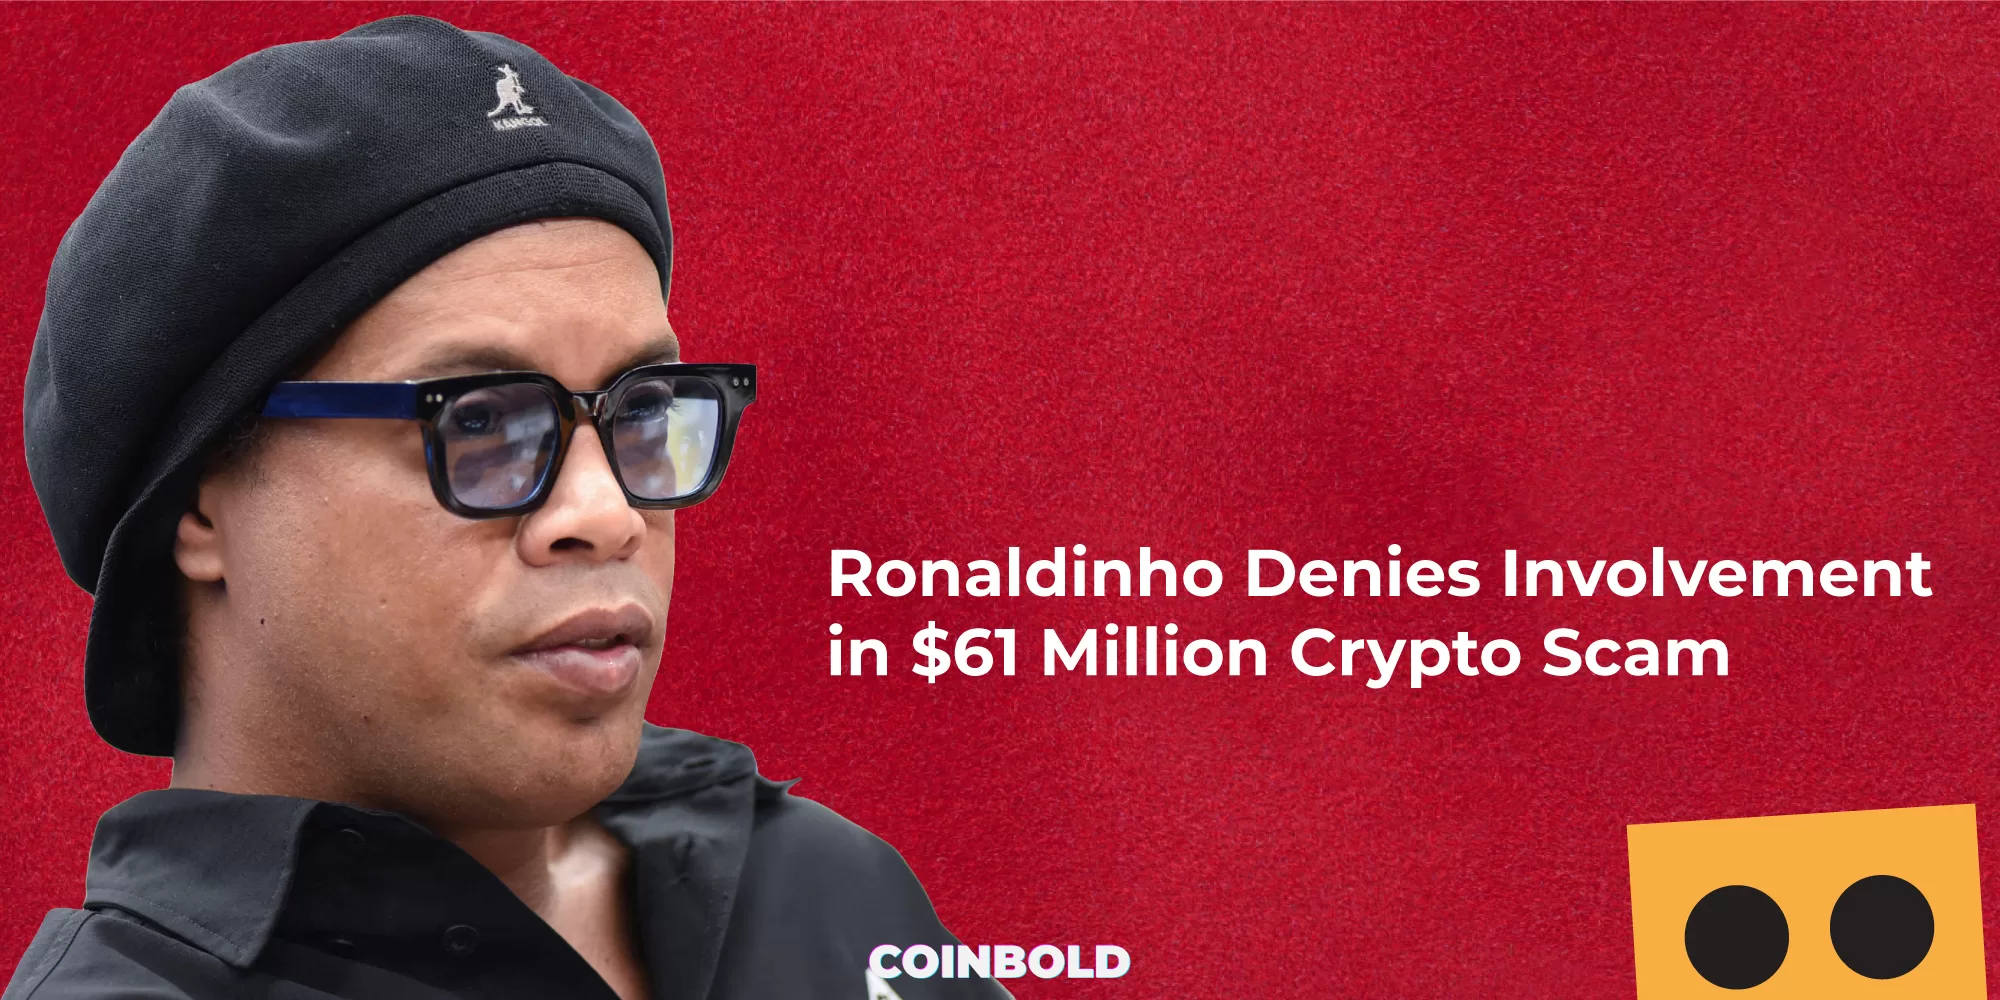 Ronaldinho Denies Involvement in $61 Million Crypto Scam